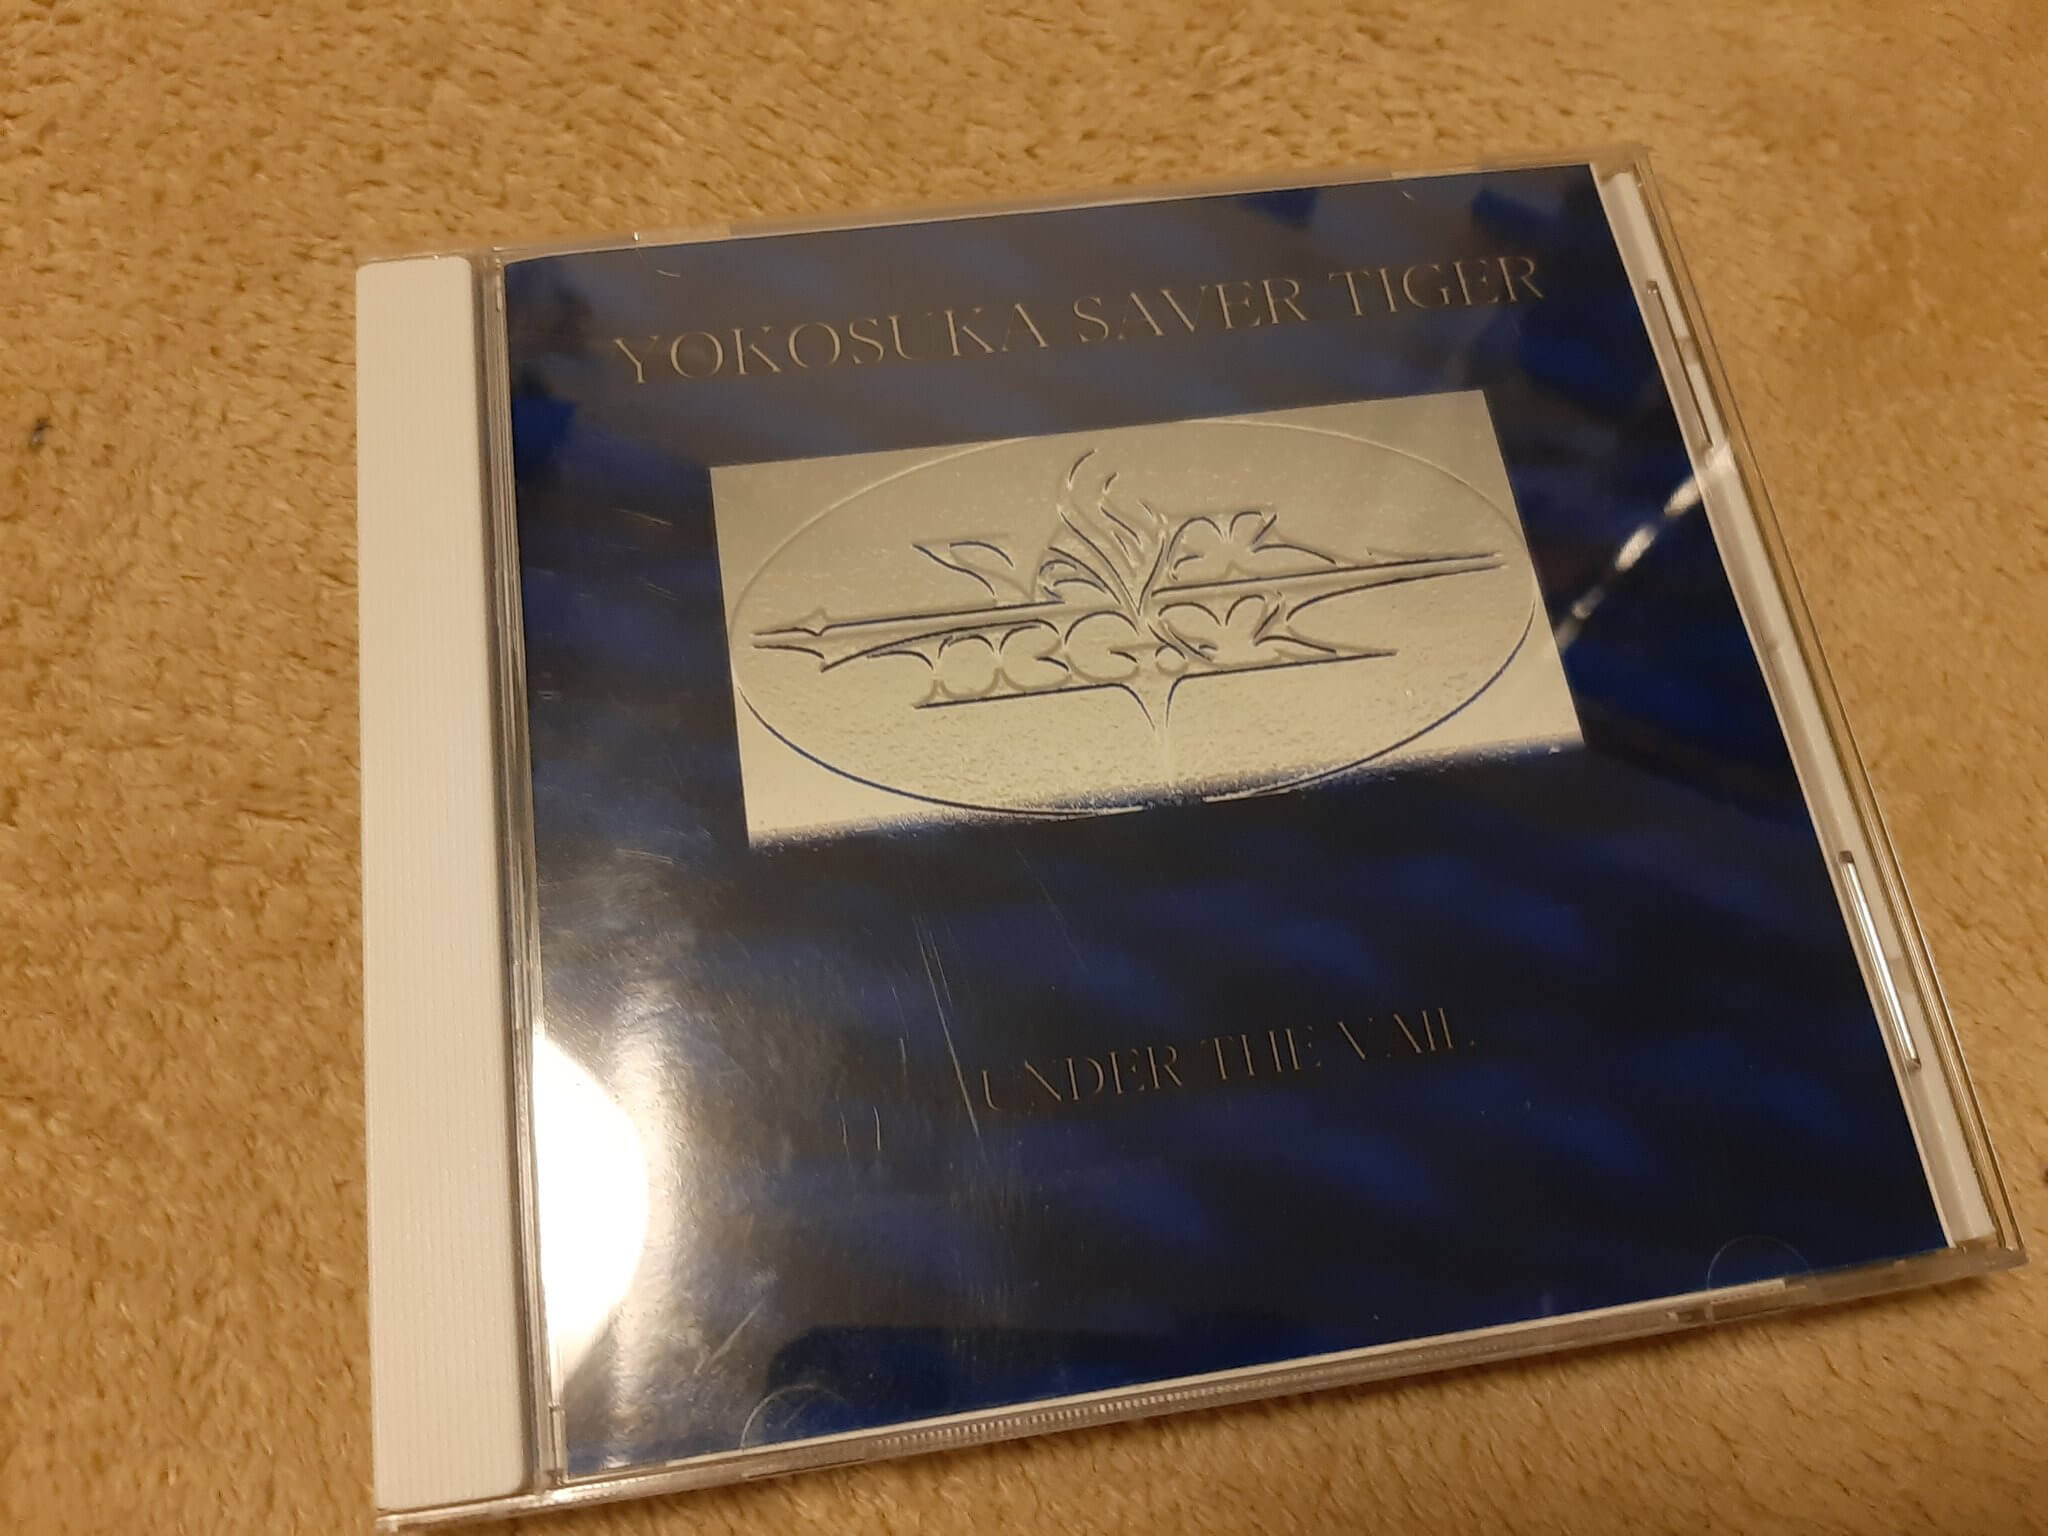 Yokosuka SAVER TIGER discography | 横須賀サーベルタイガー 